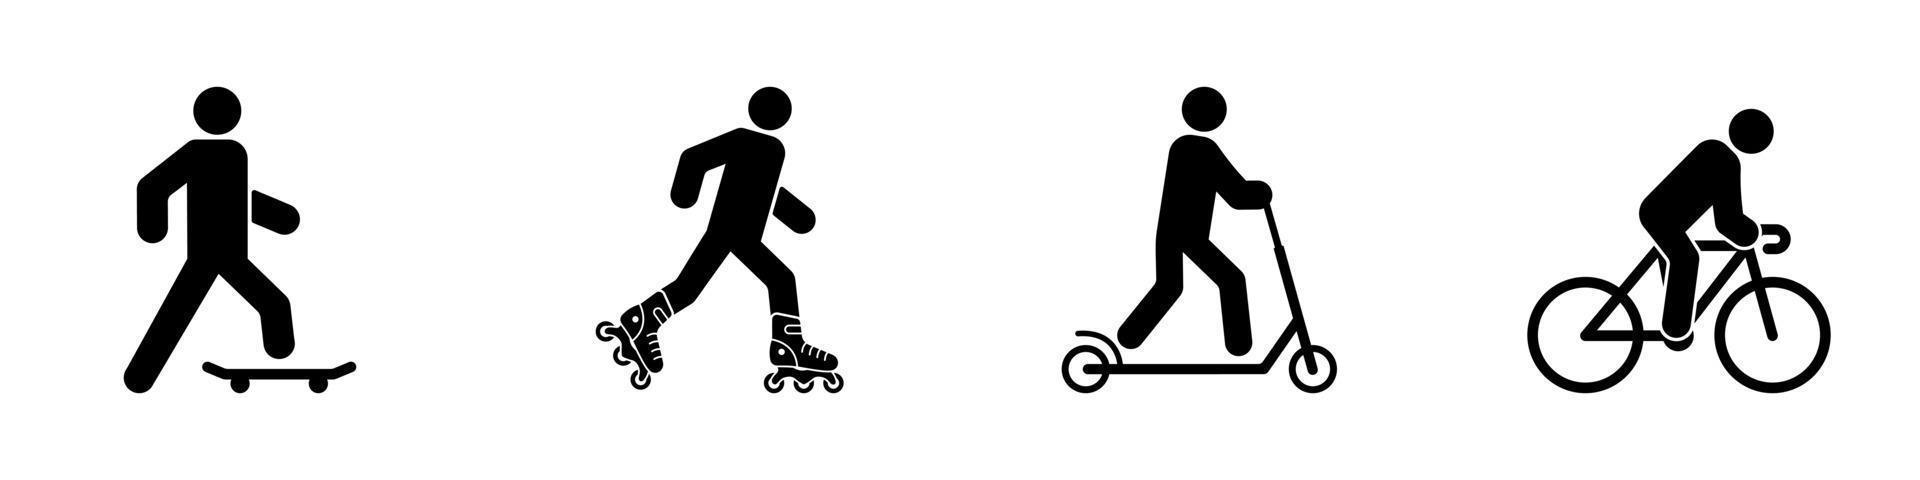 Mann auf Skateboard Tretroller Fahrrad Rollerskate schwarze Silhouette Symbolsatz. person mieten rollschuh skateboard fahrrad glyph piktogramm. aktives Transport-Flachsymbol. isolierte Vektorillustration. vektor